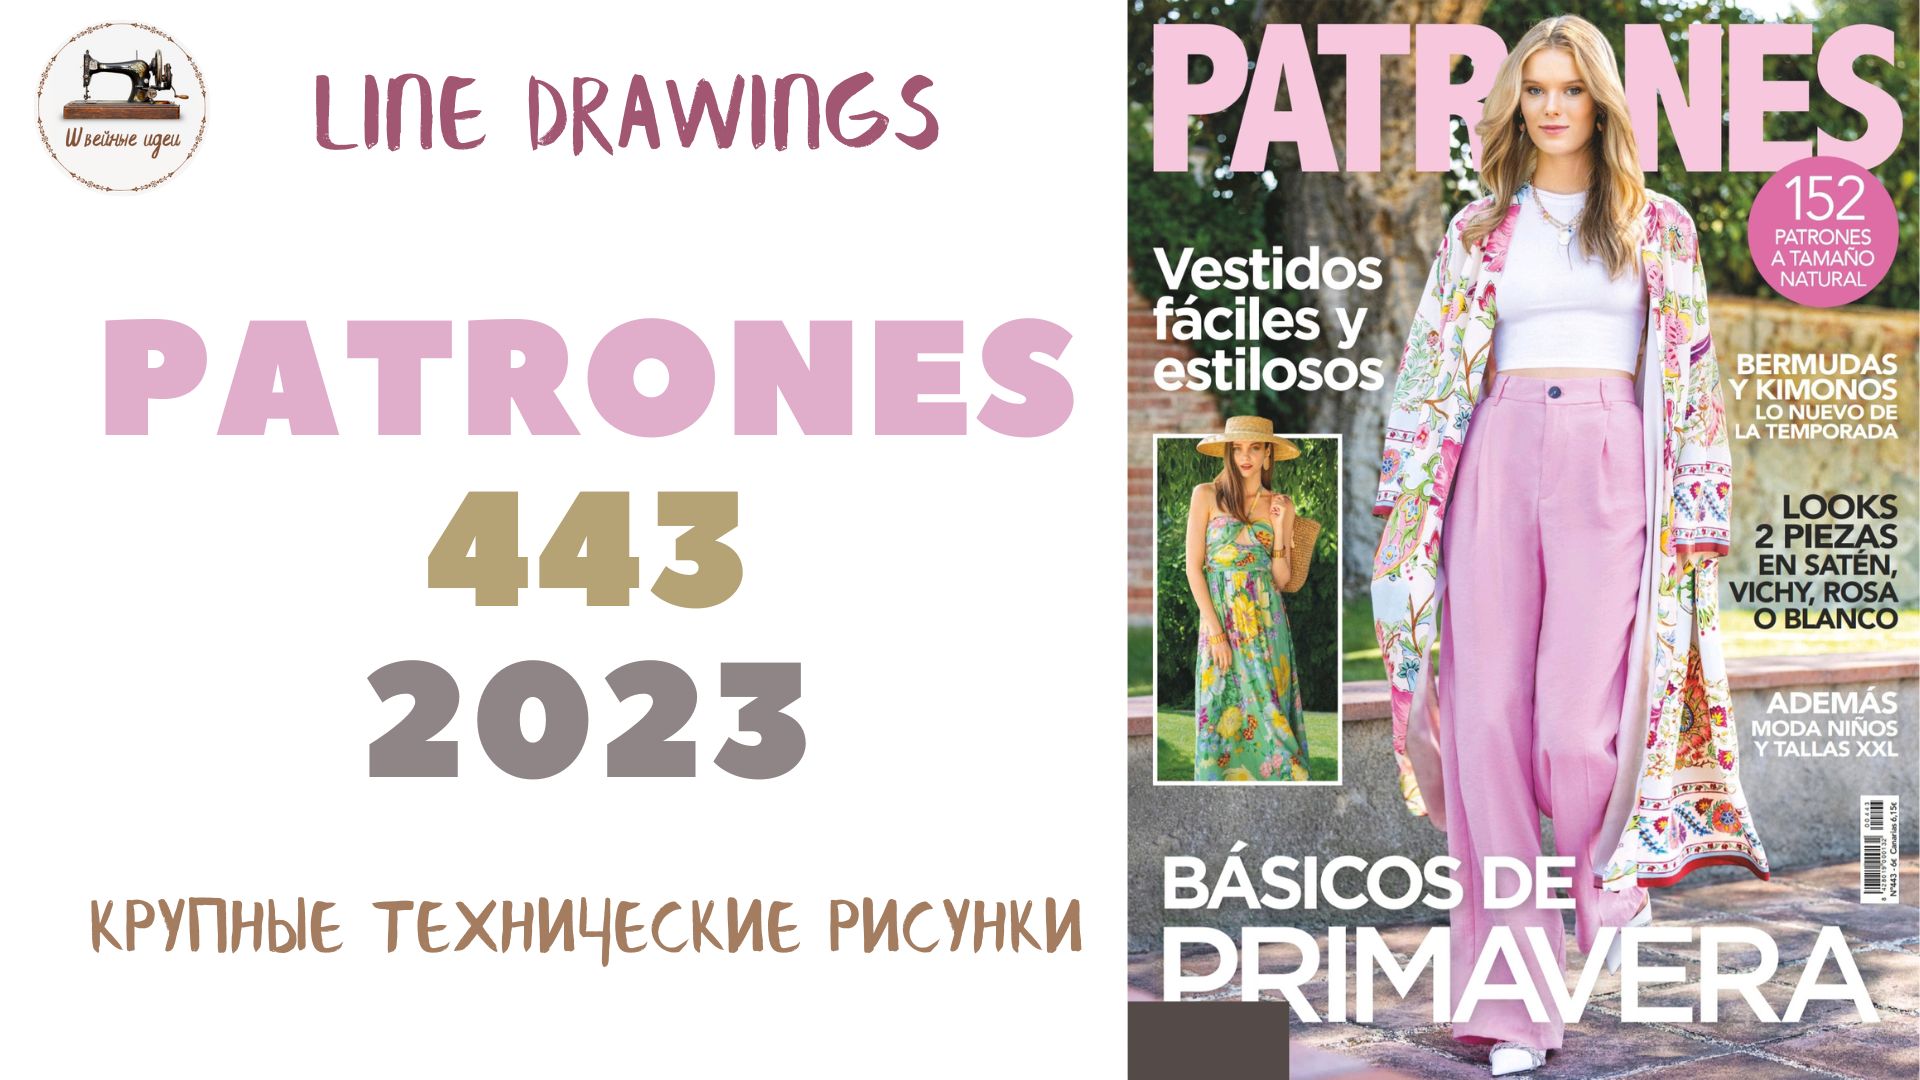 Журнал Patrones 443 2023 (Технические рисунки крупно). Летняя мода из Испании